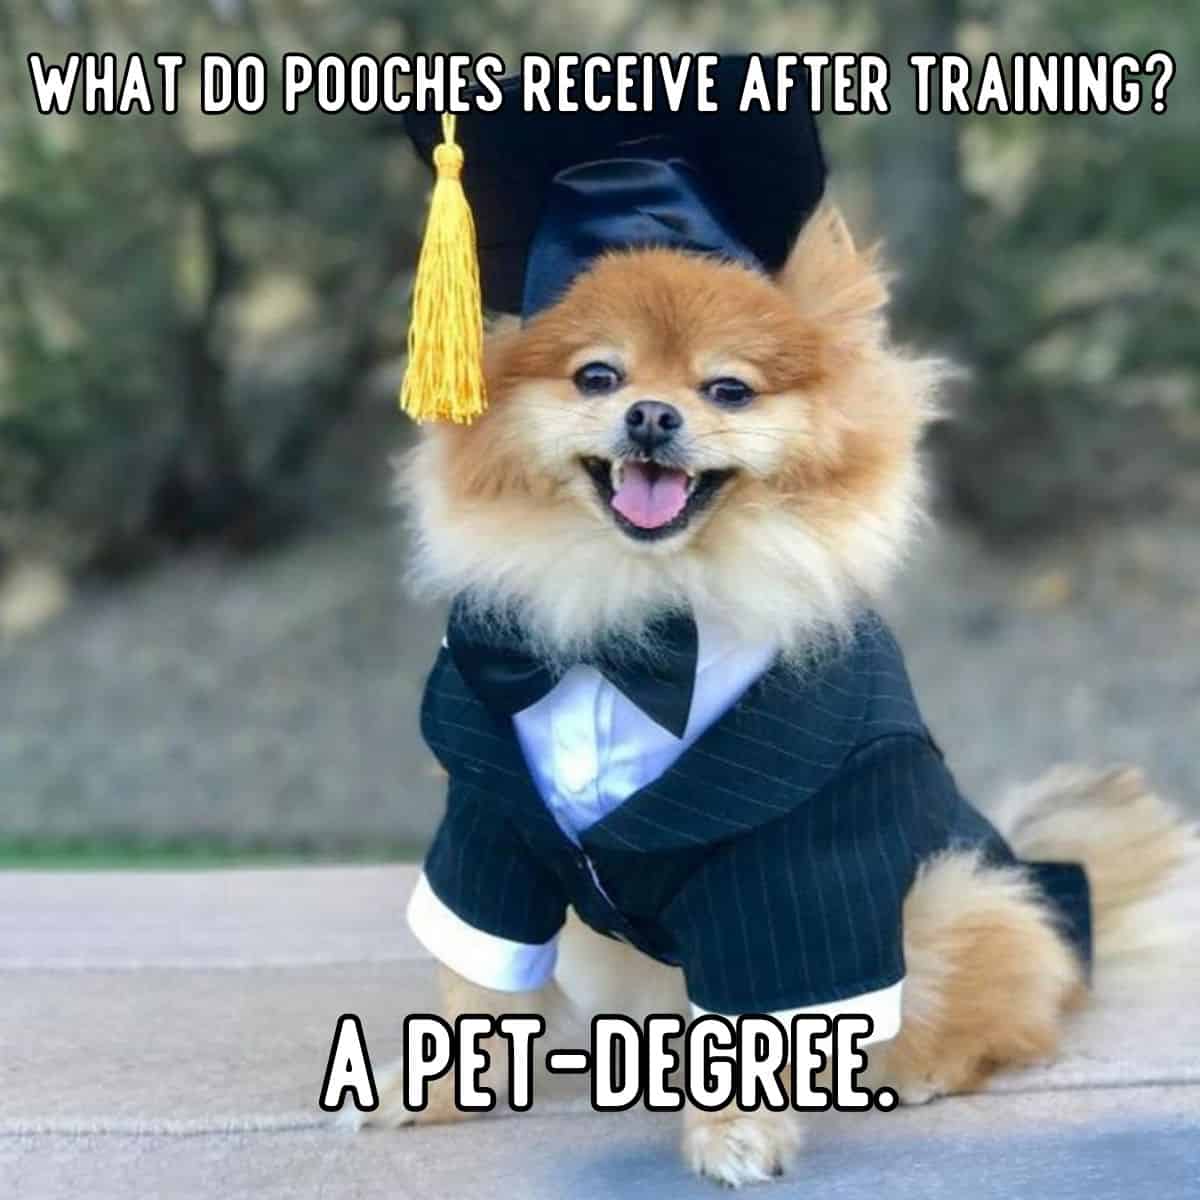 pet-degree joke